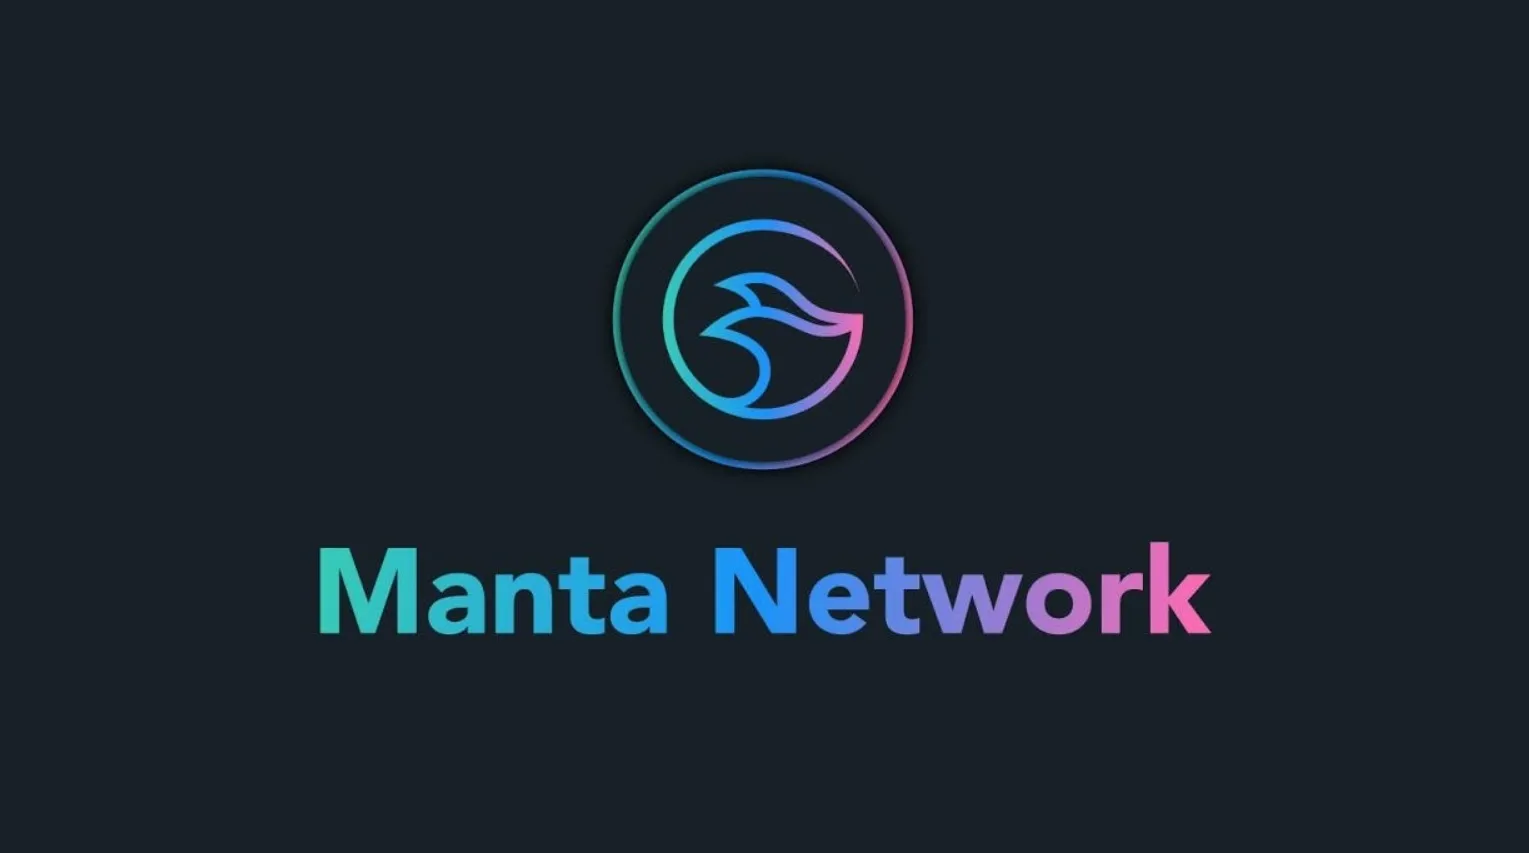 manta network zero-knowledge